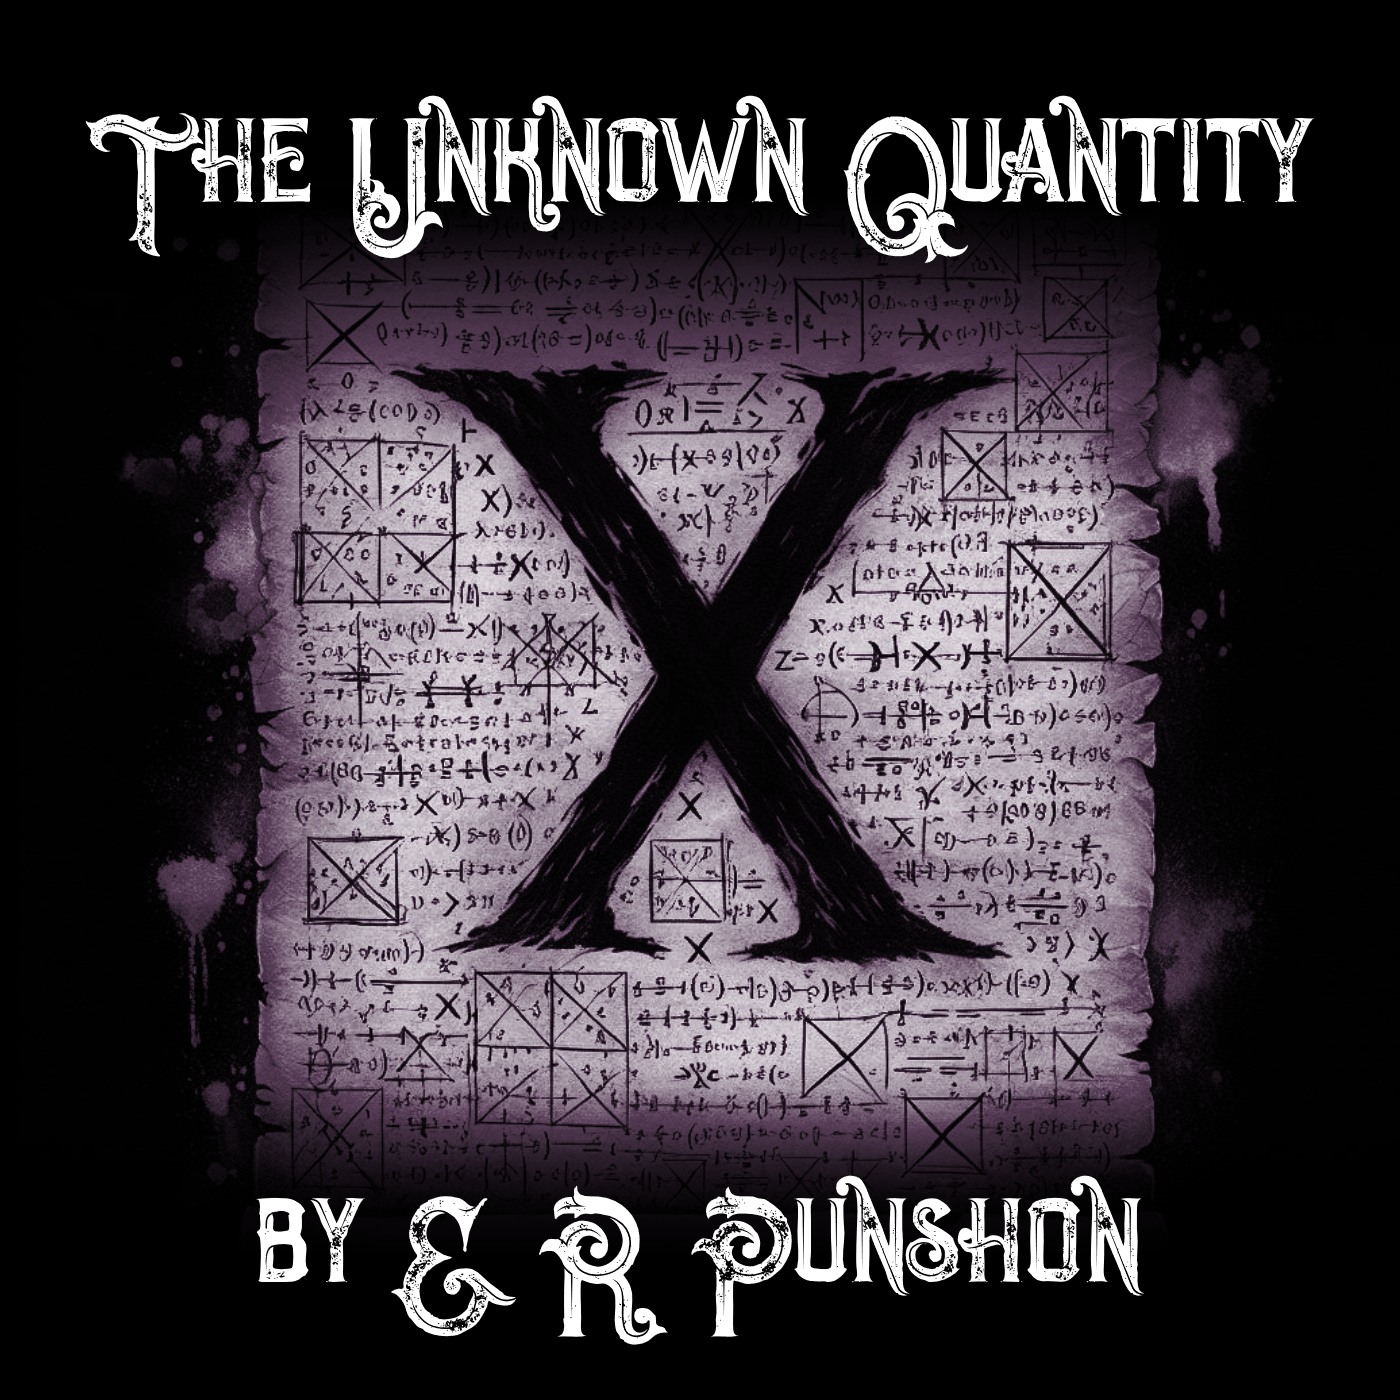 The Unknown Quantity, by E. R. Punshon